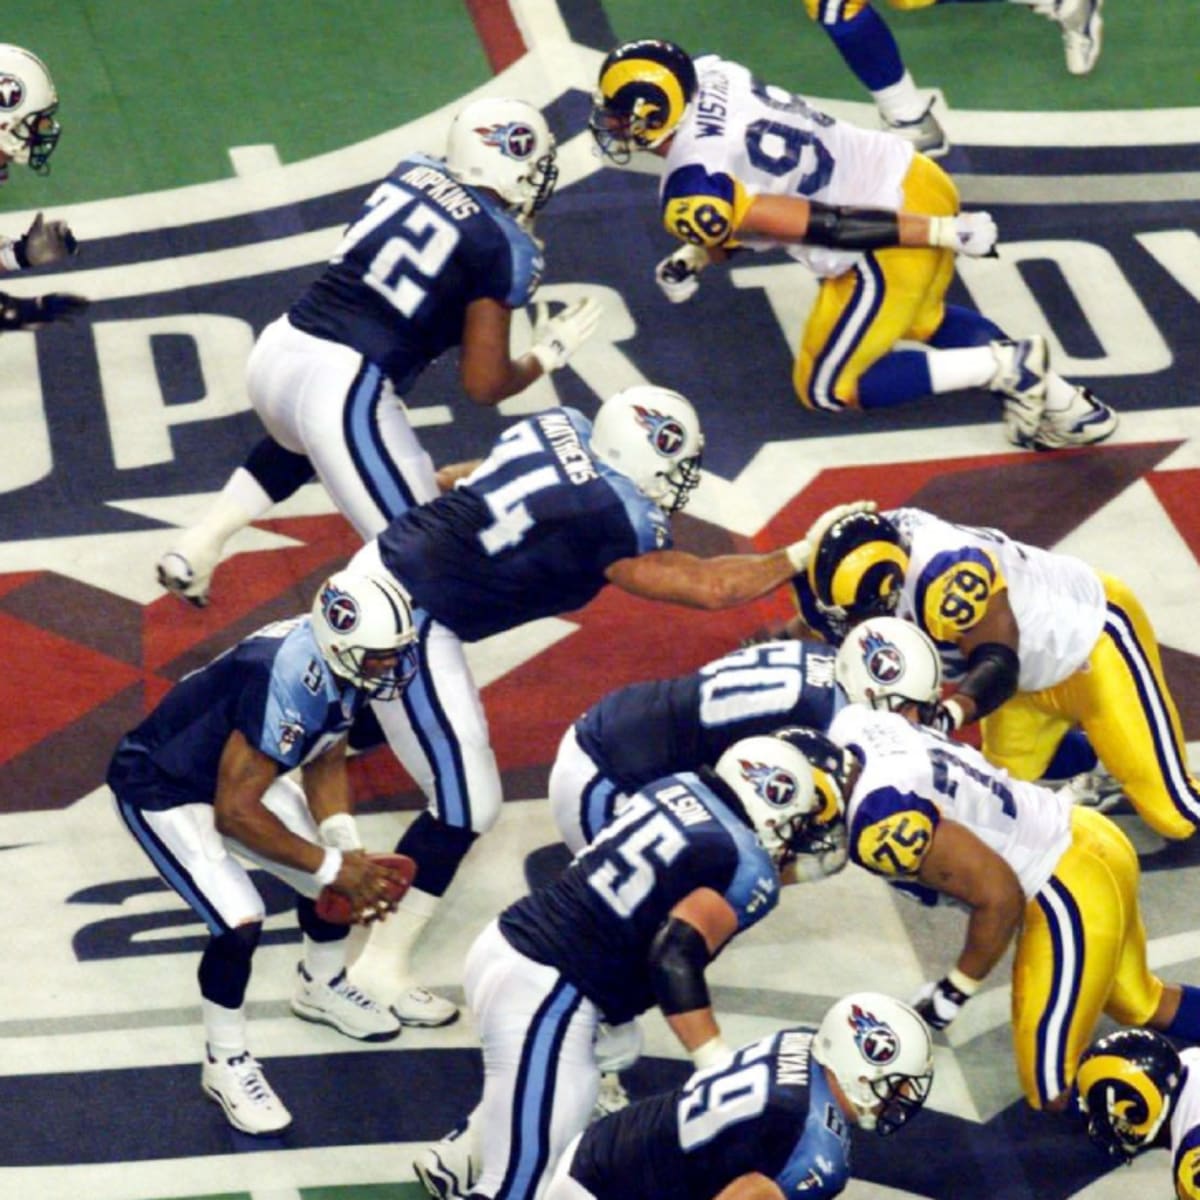 St. Louis Rams Qb Kurt Warner, Super Bowl Xxxiv Champions Sports  Illustrated Cover by Sports Illustrated